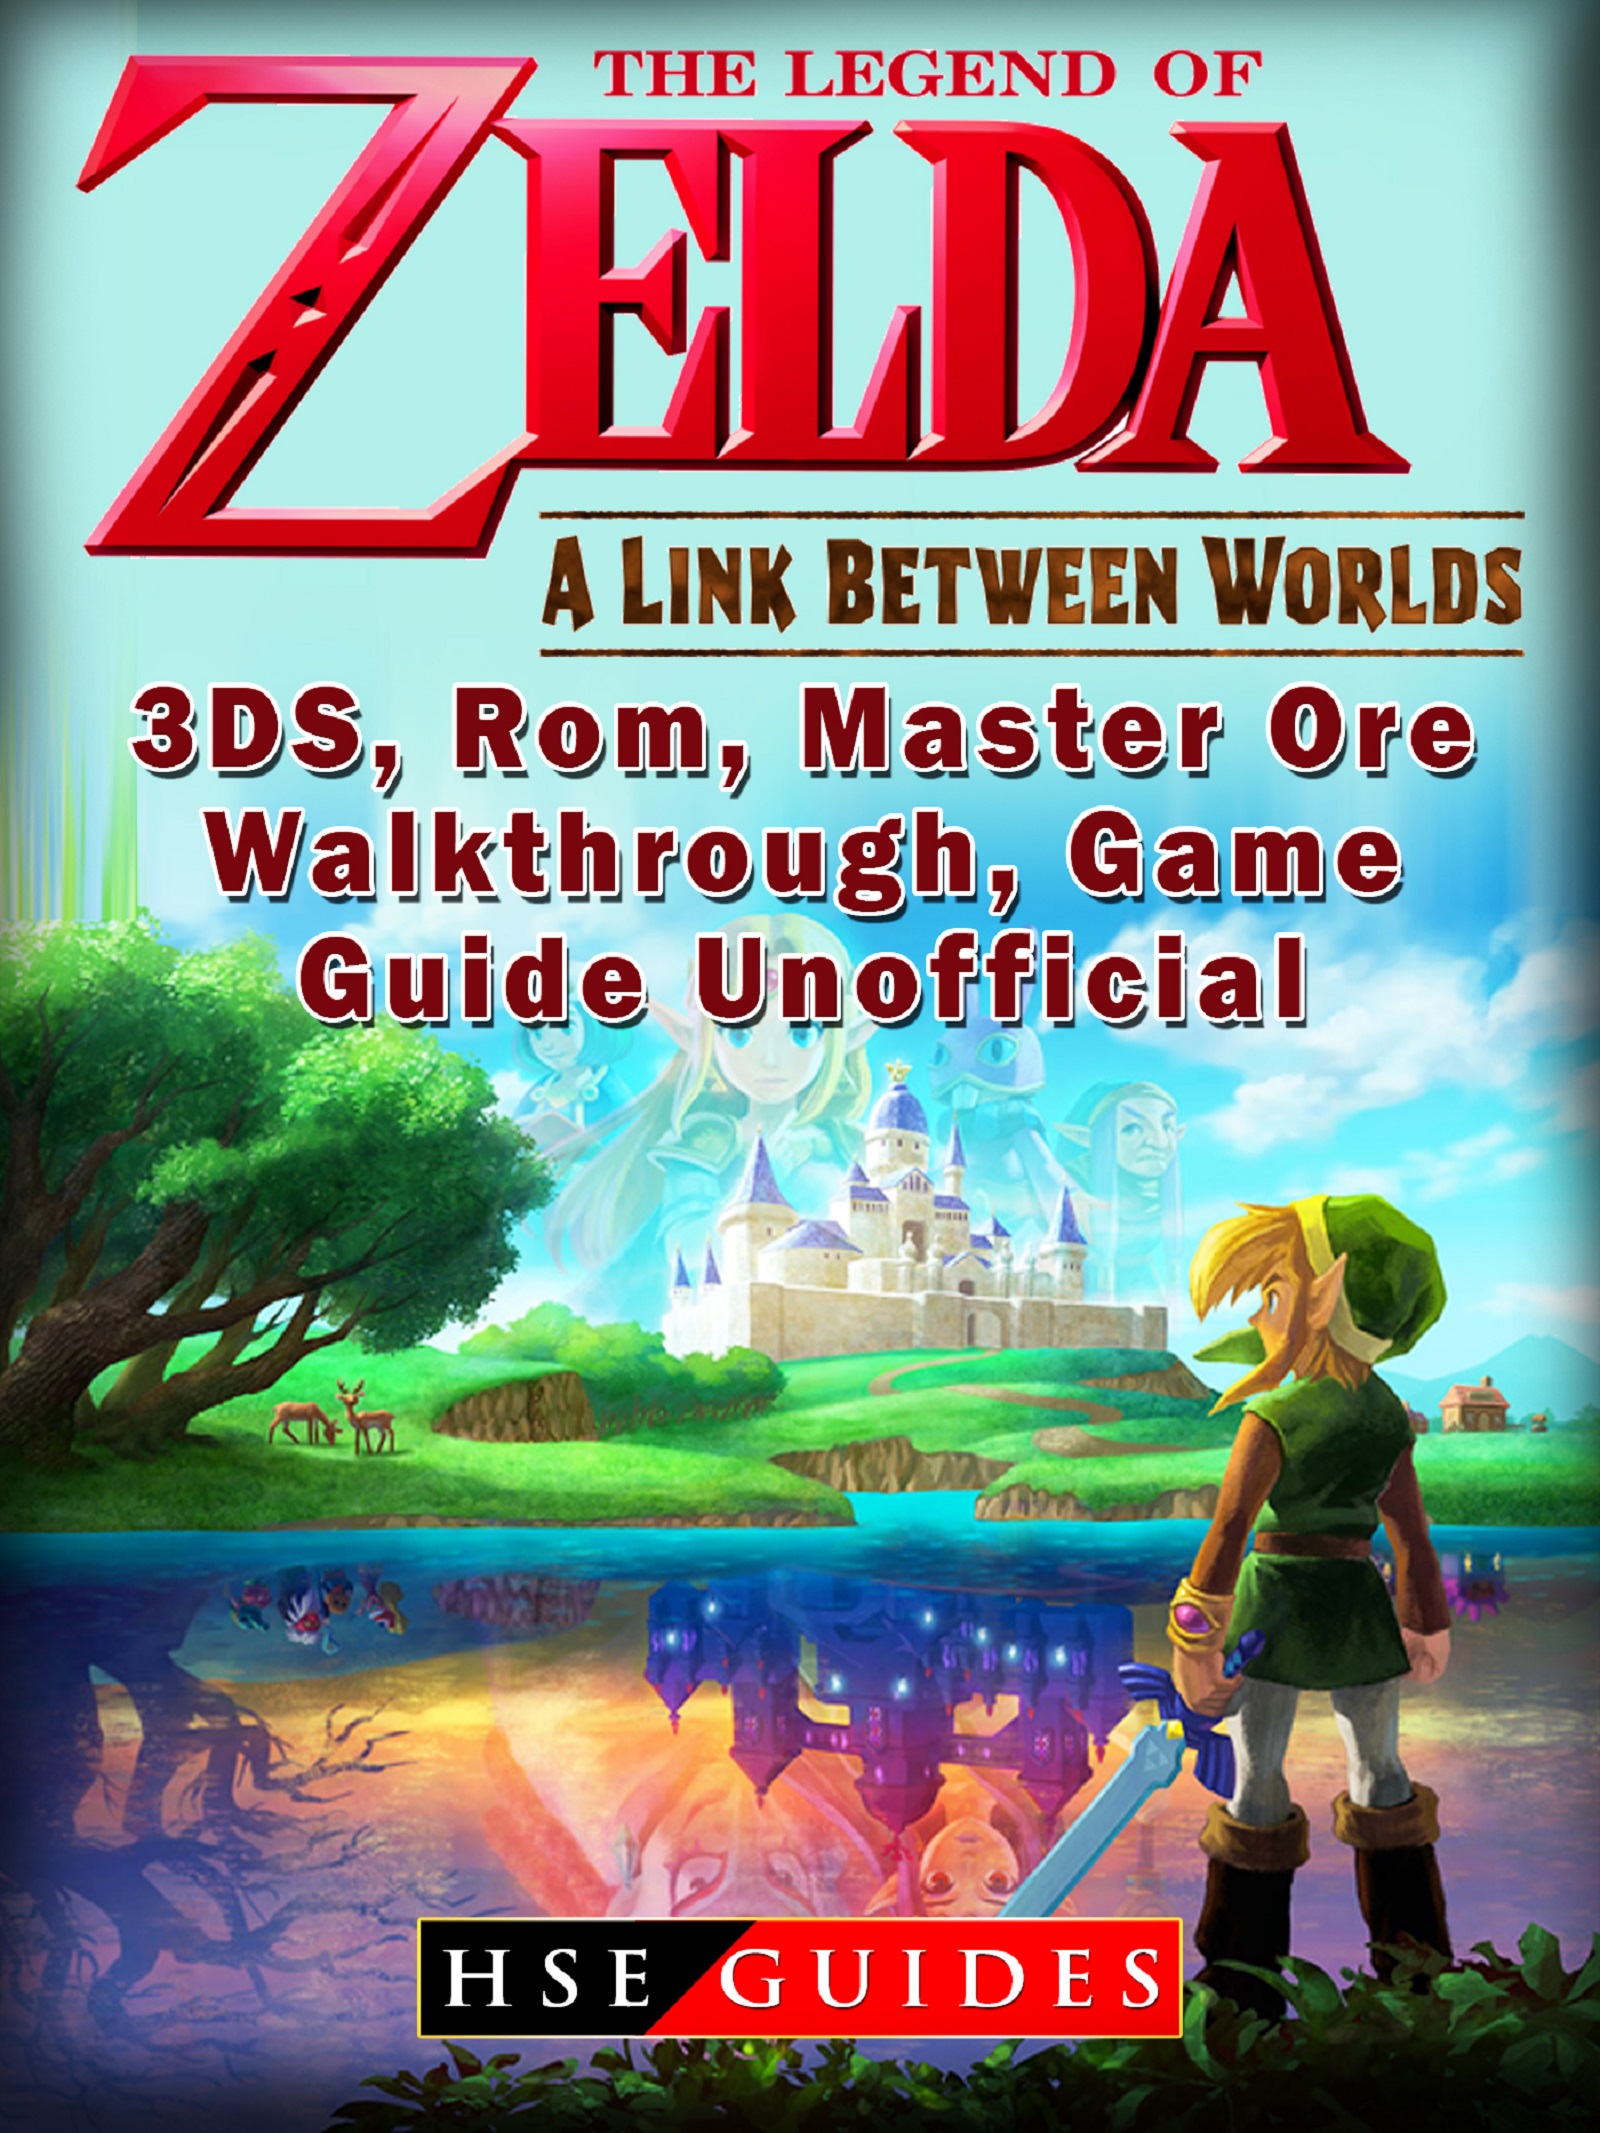 Zelda a link between worlds guide pdf download torrent